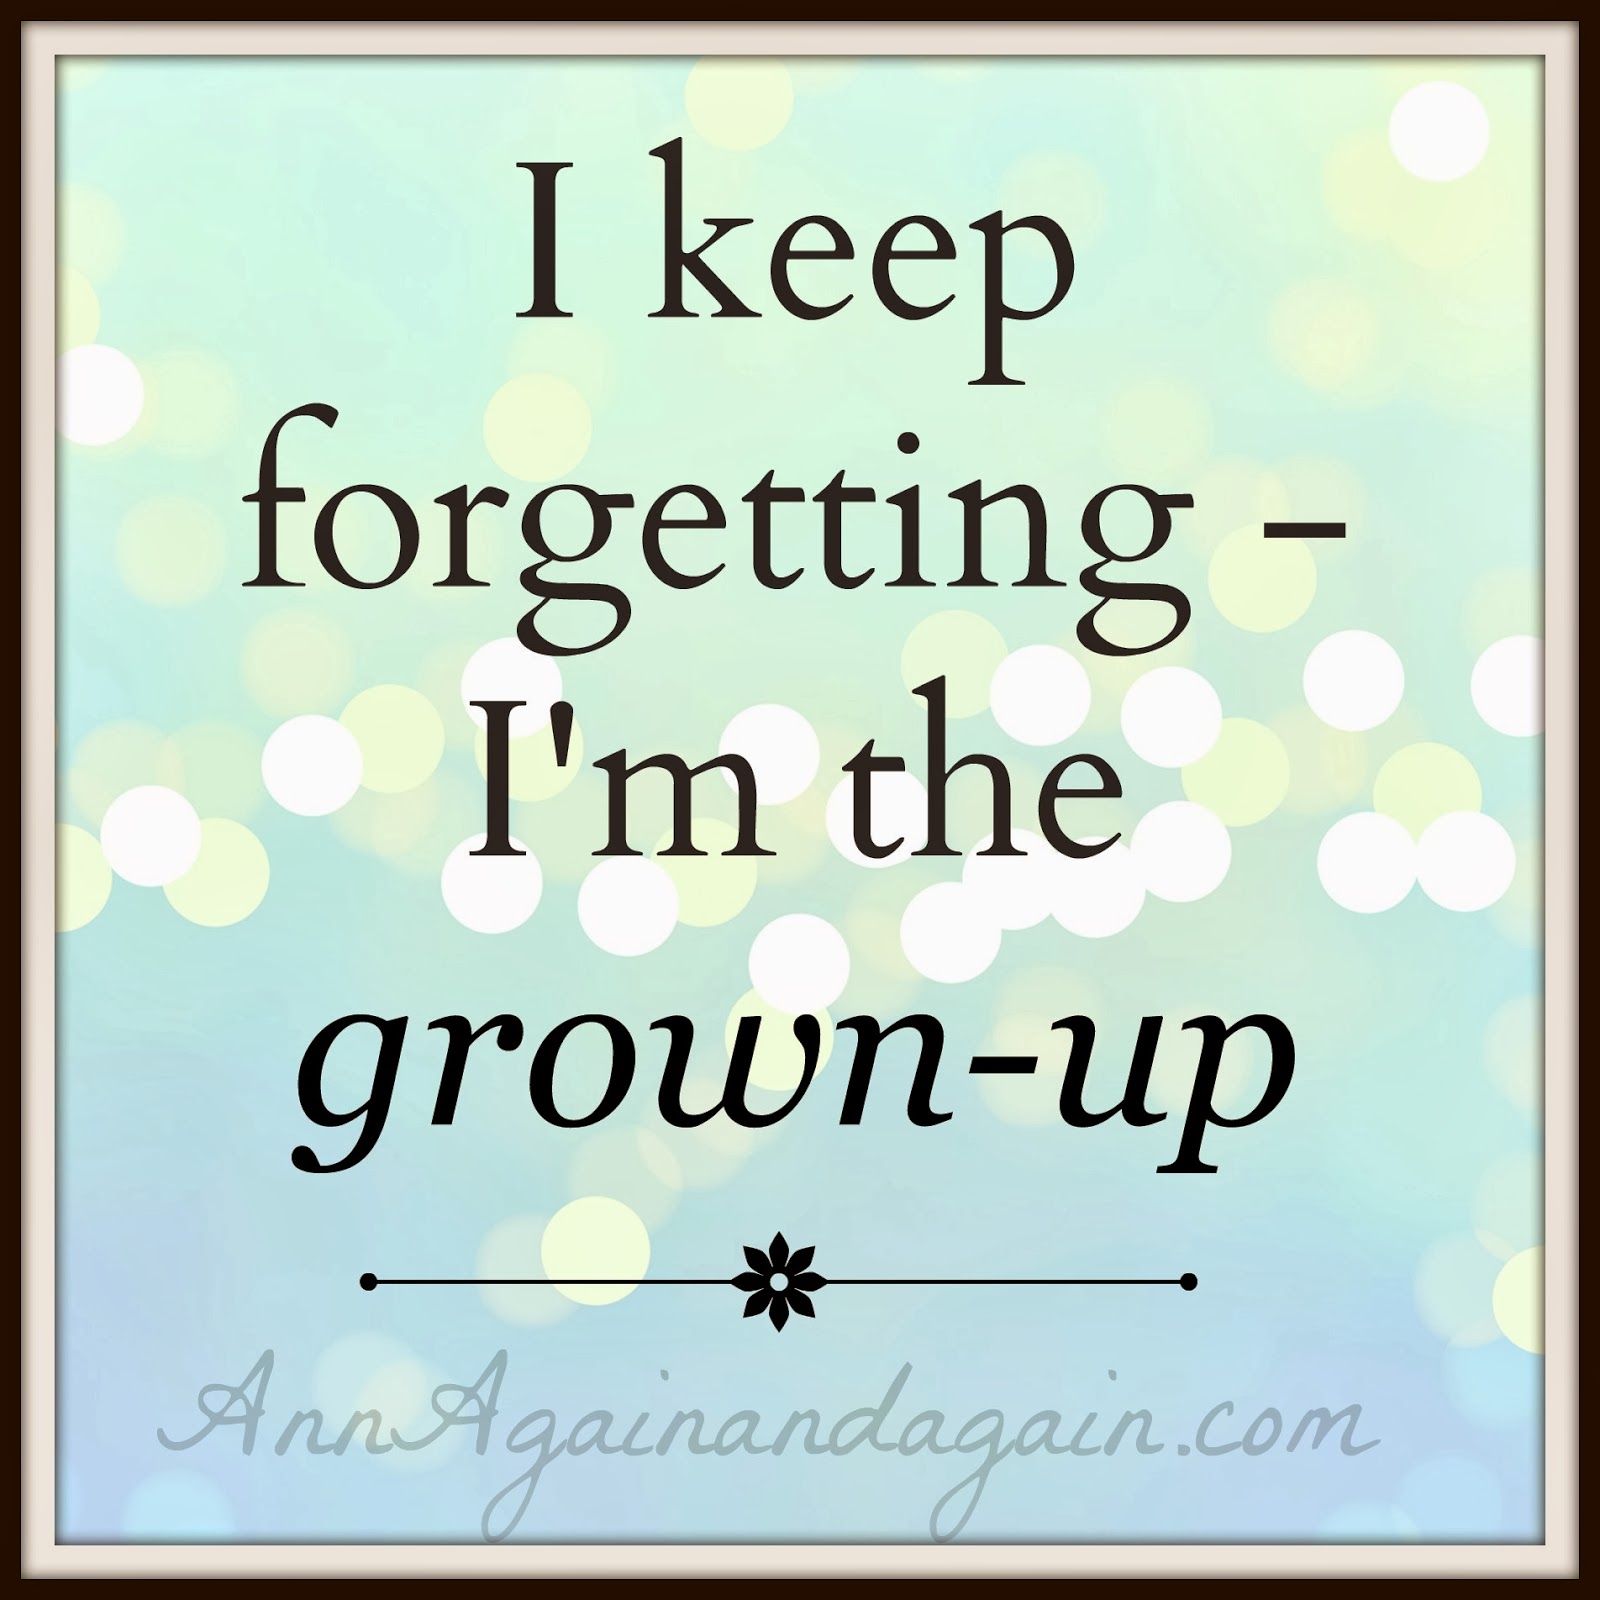 I keep forgetting - I'm the grown-up =  Ann Again and again